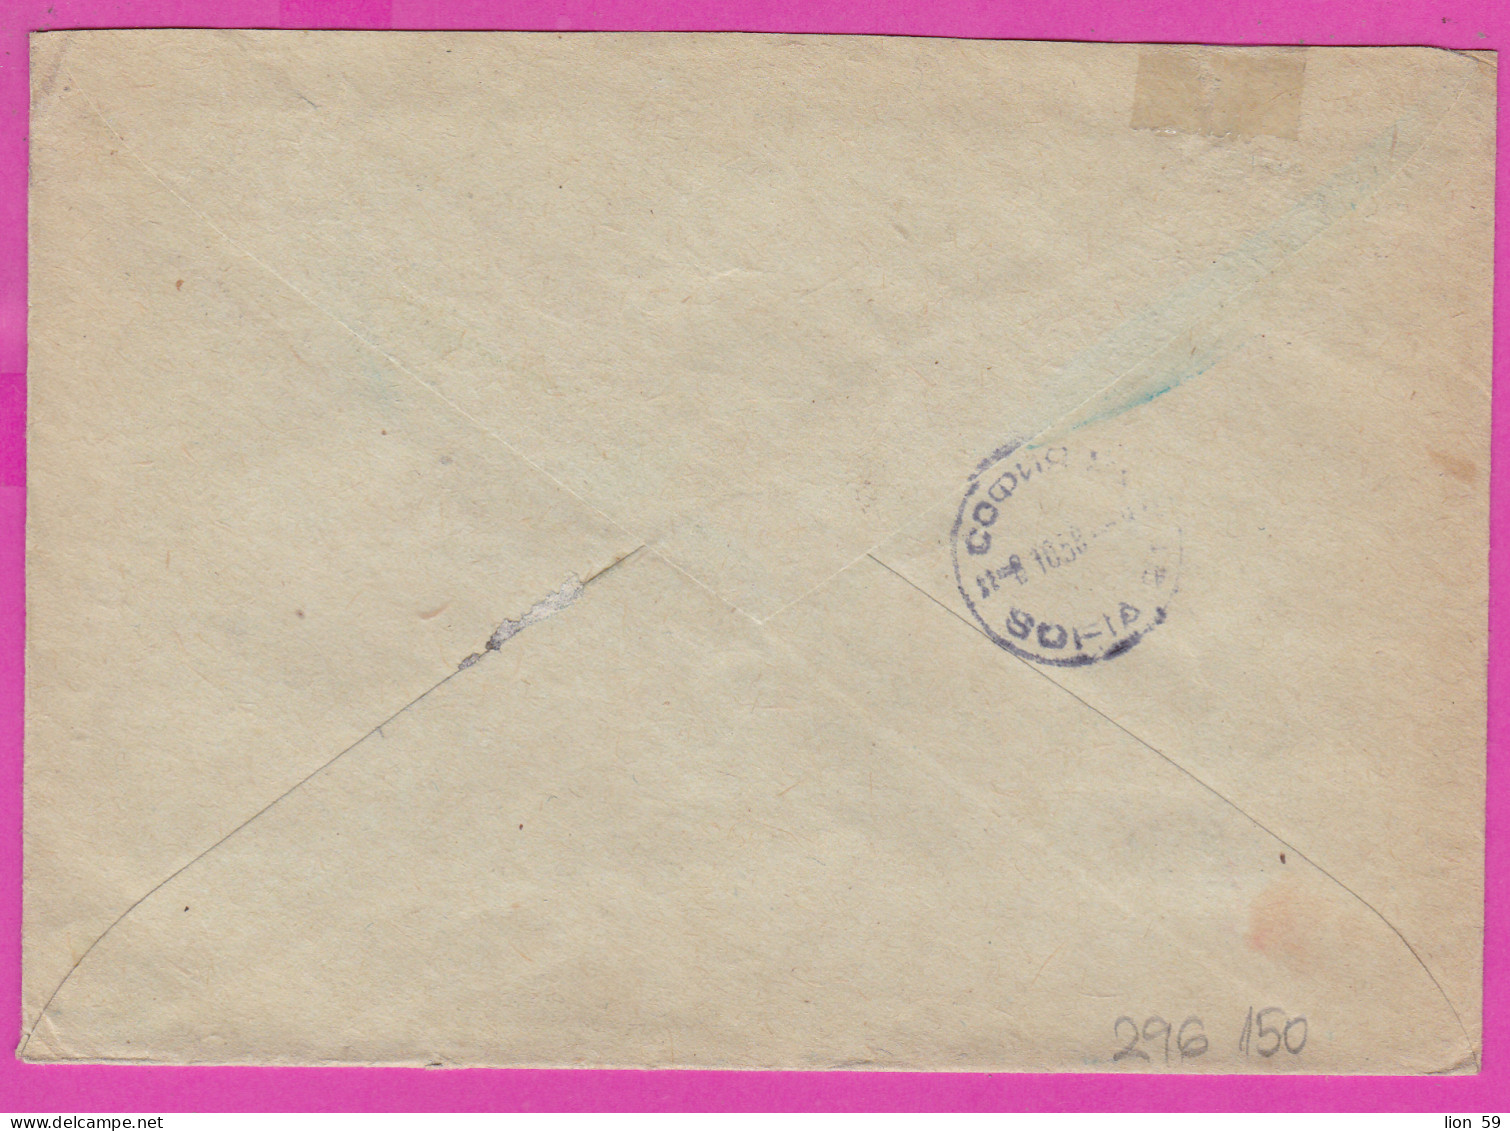 296150 / Russia 1958 - 20+40 K. (Kremlin) Standard , Dubna - Sofia BG , Stationery Entier Ganzsachen Cover - 1950-59